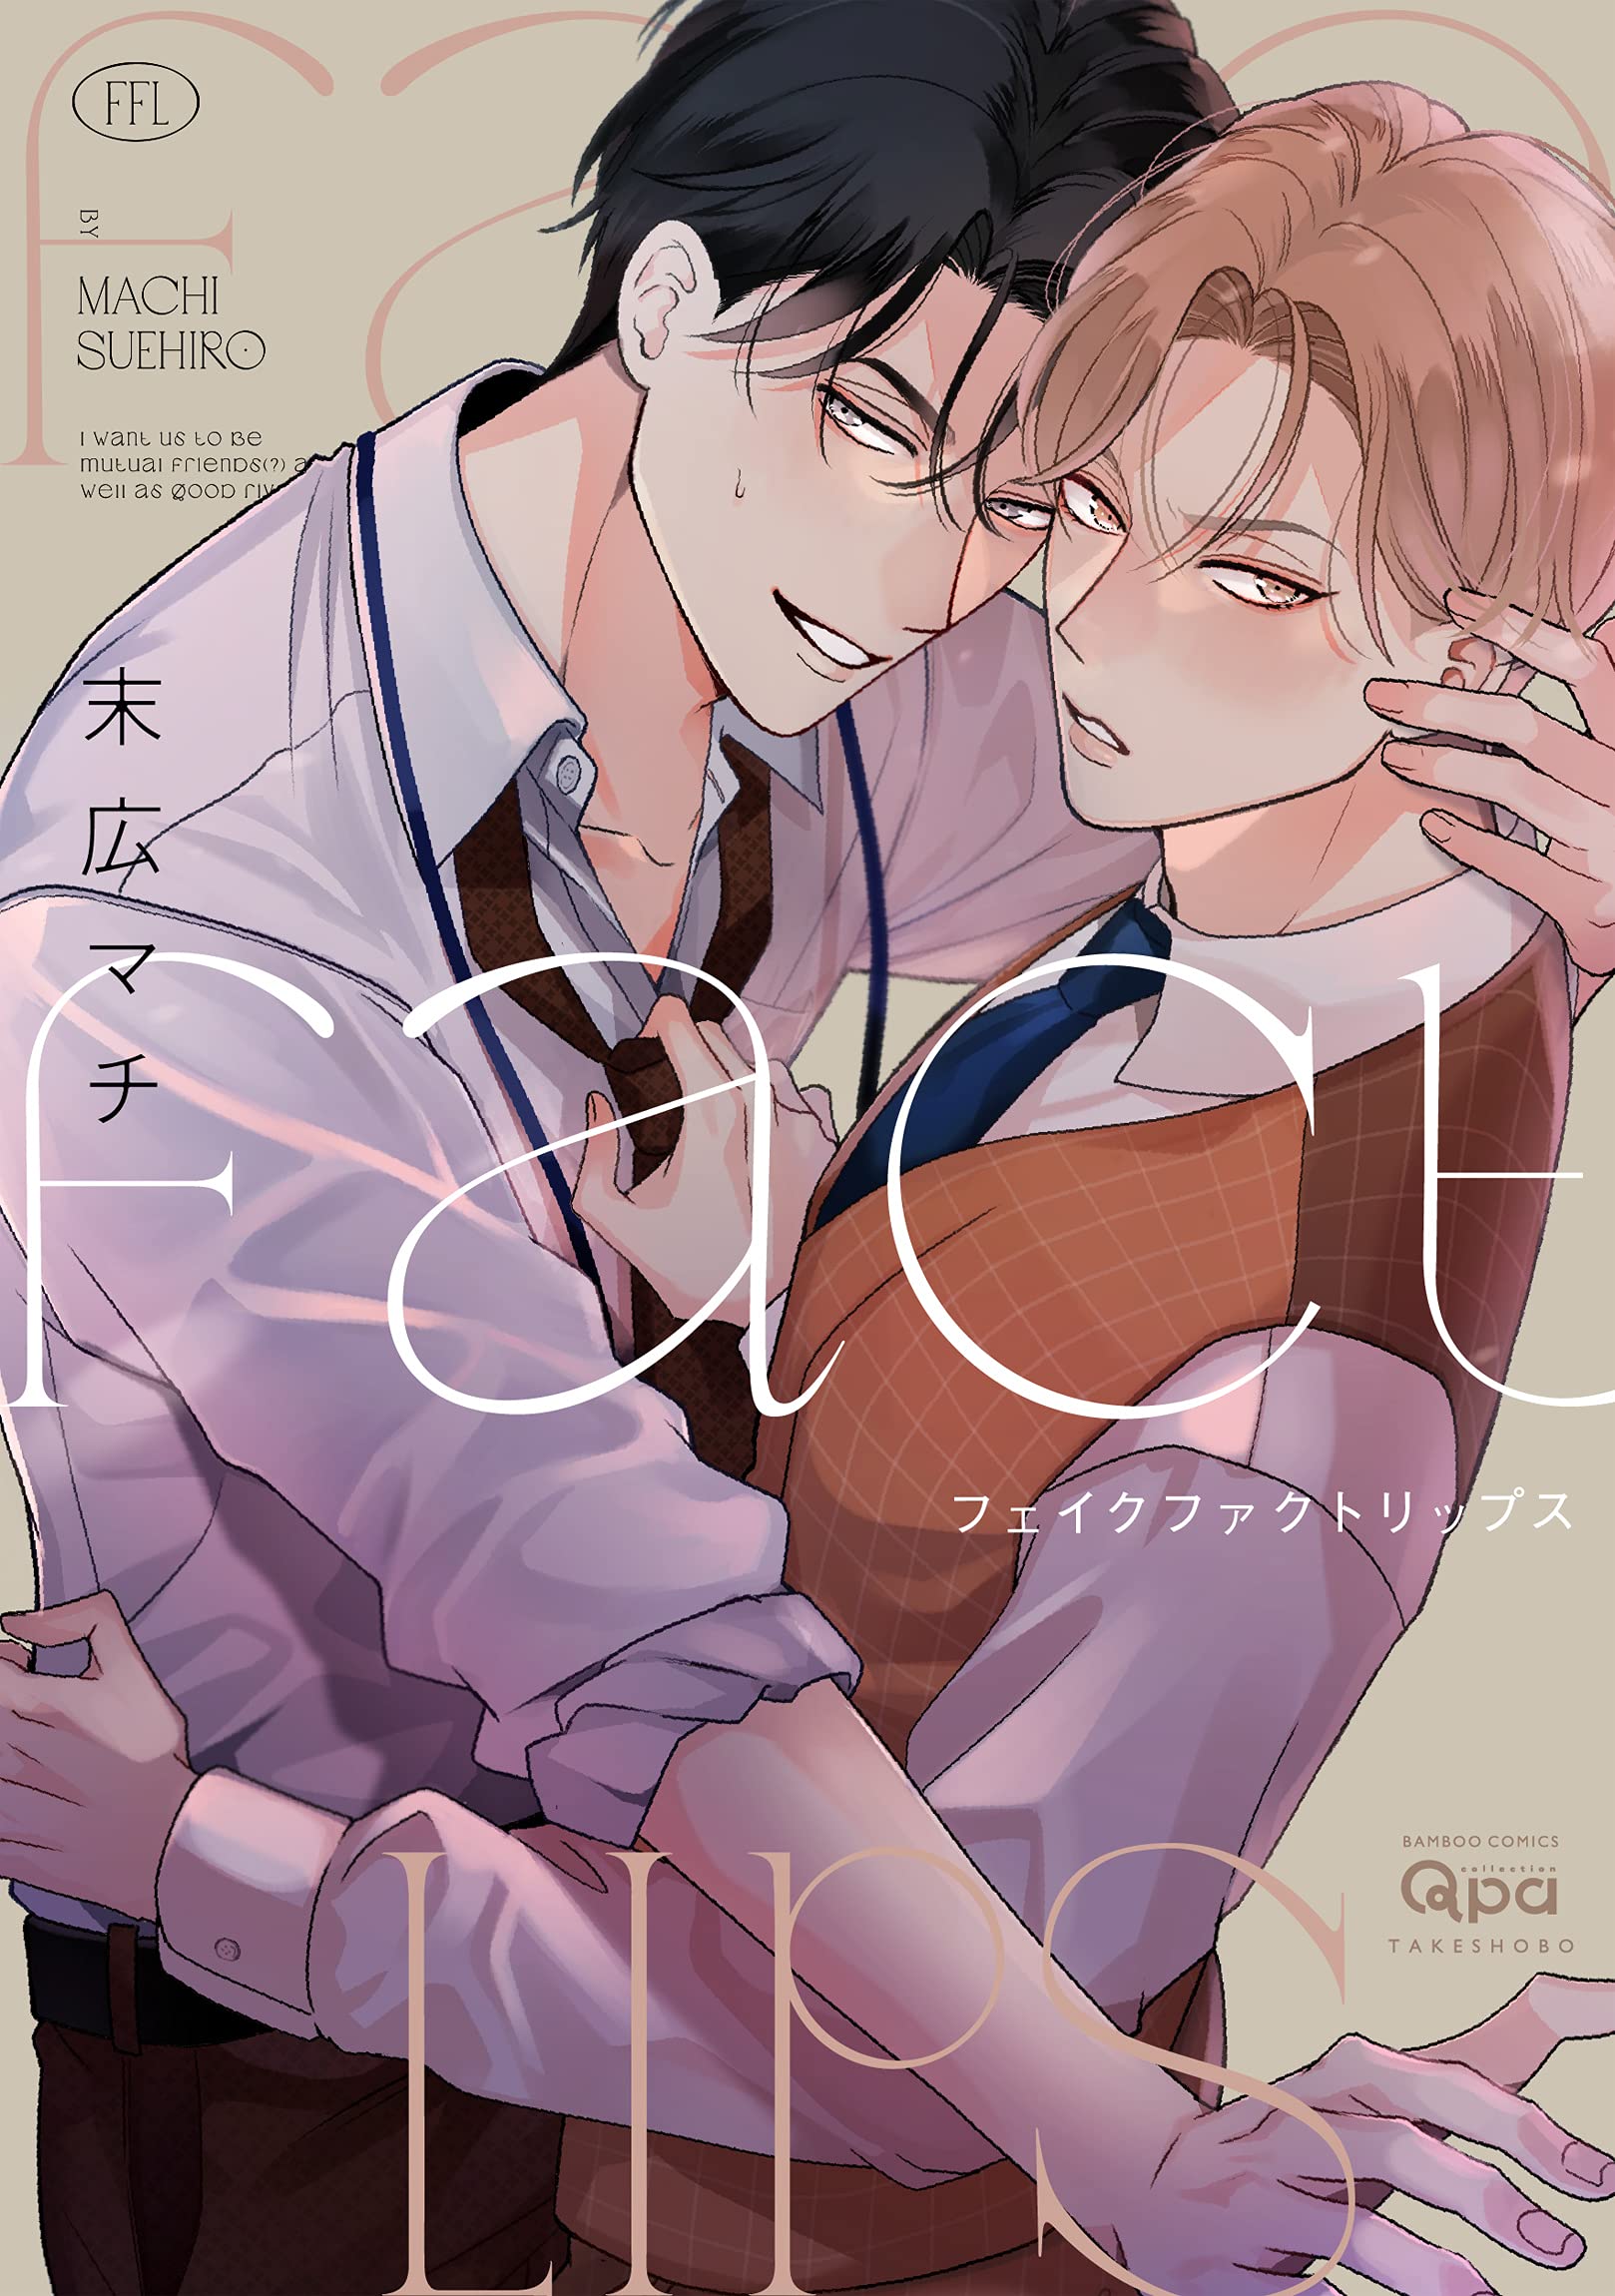 Boys Love (Yaoi) Comics - Fake Fact Lips (フェイクファクトリップス (バンブー・コミックス Qpa collection)) / Suehiro Machi